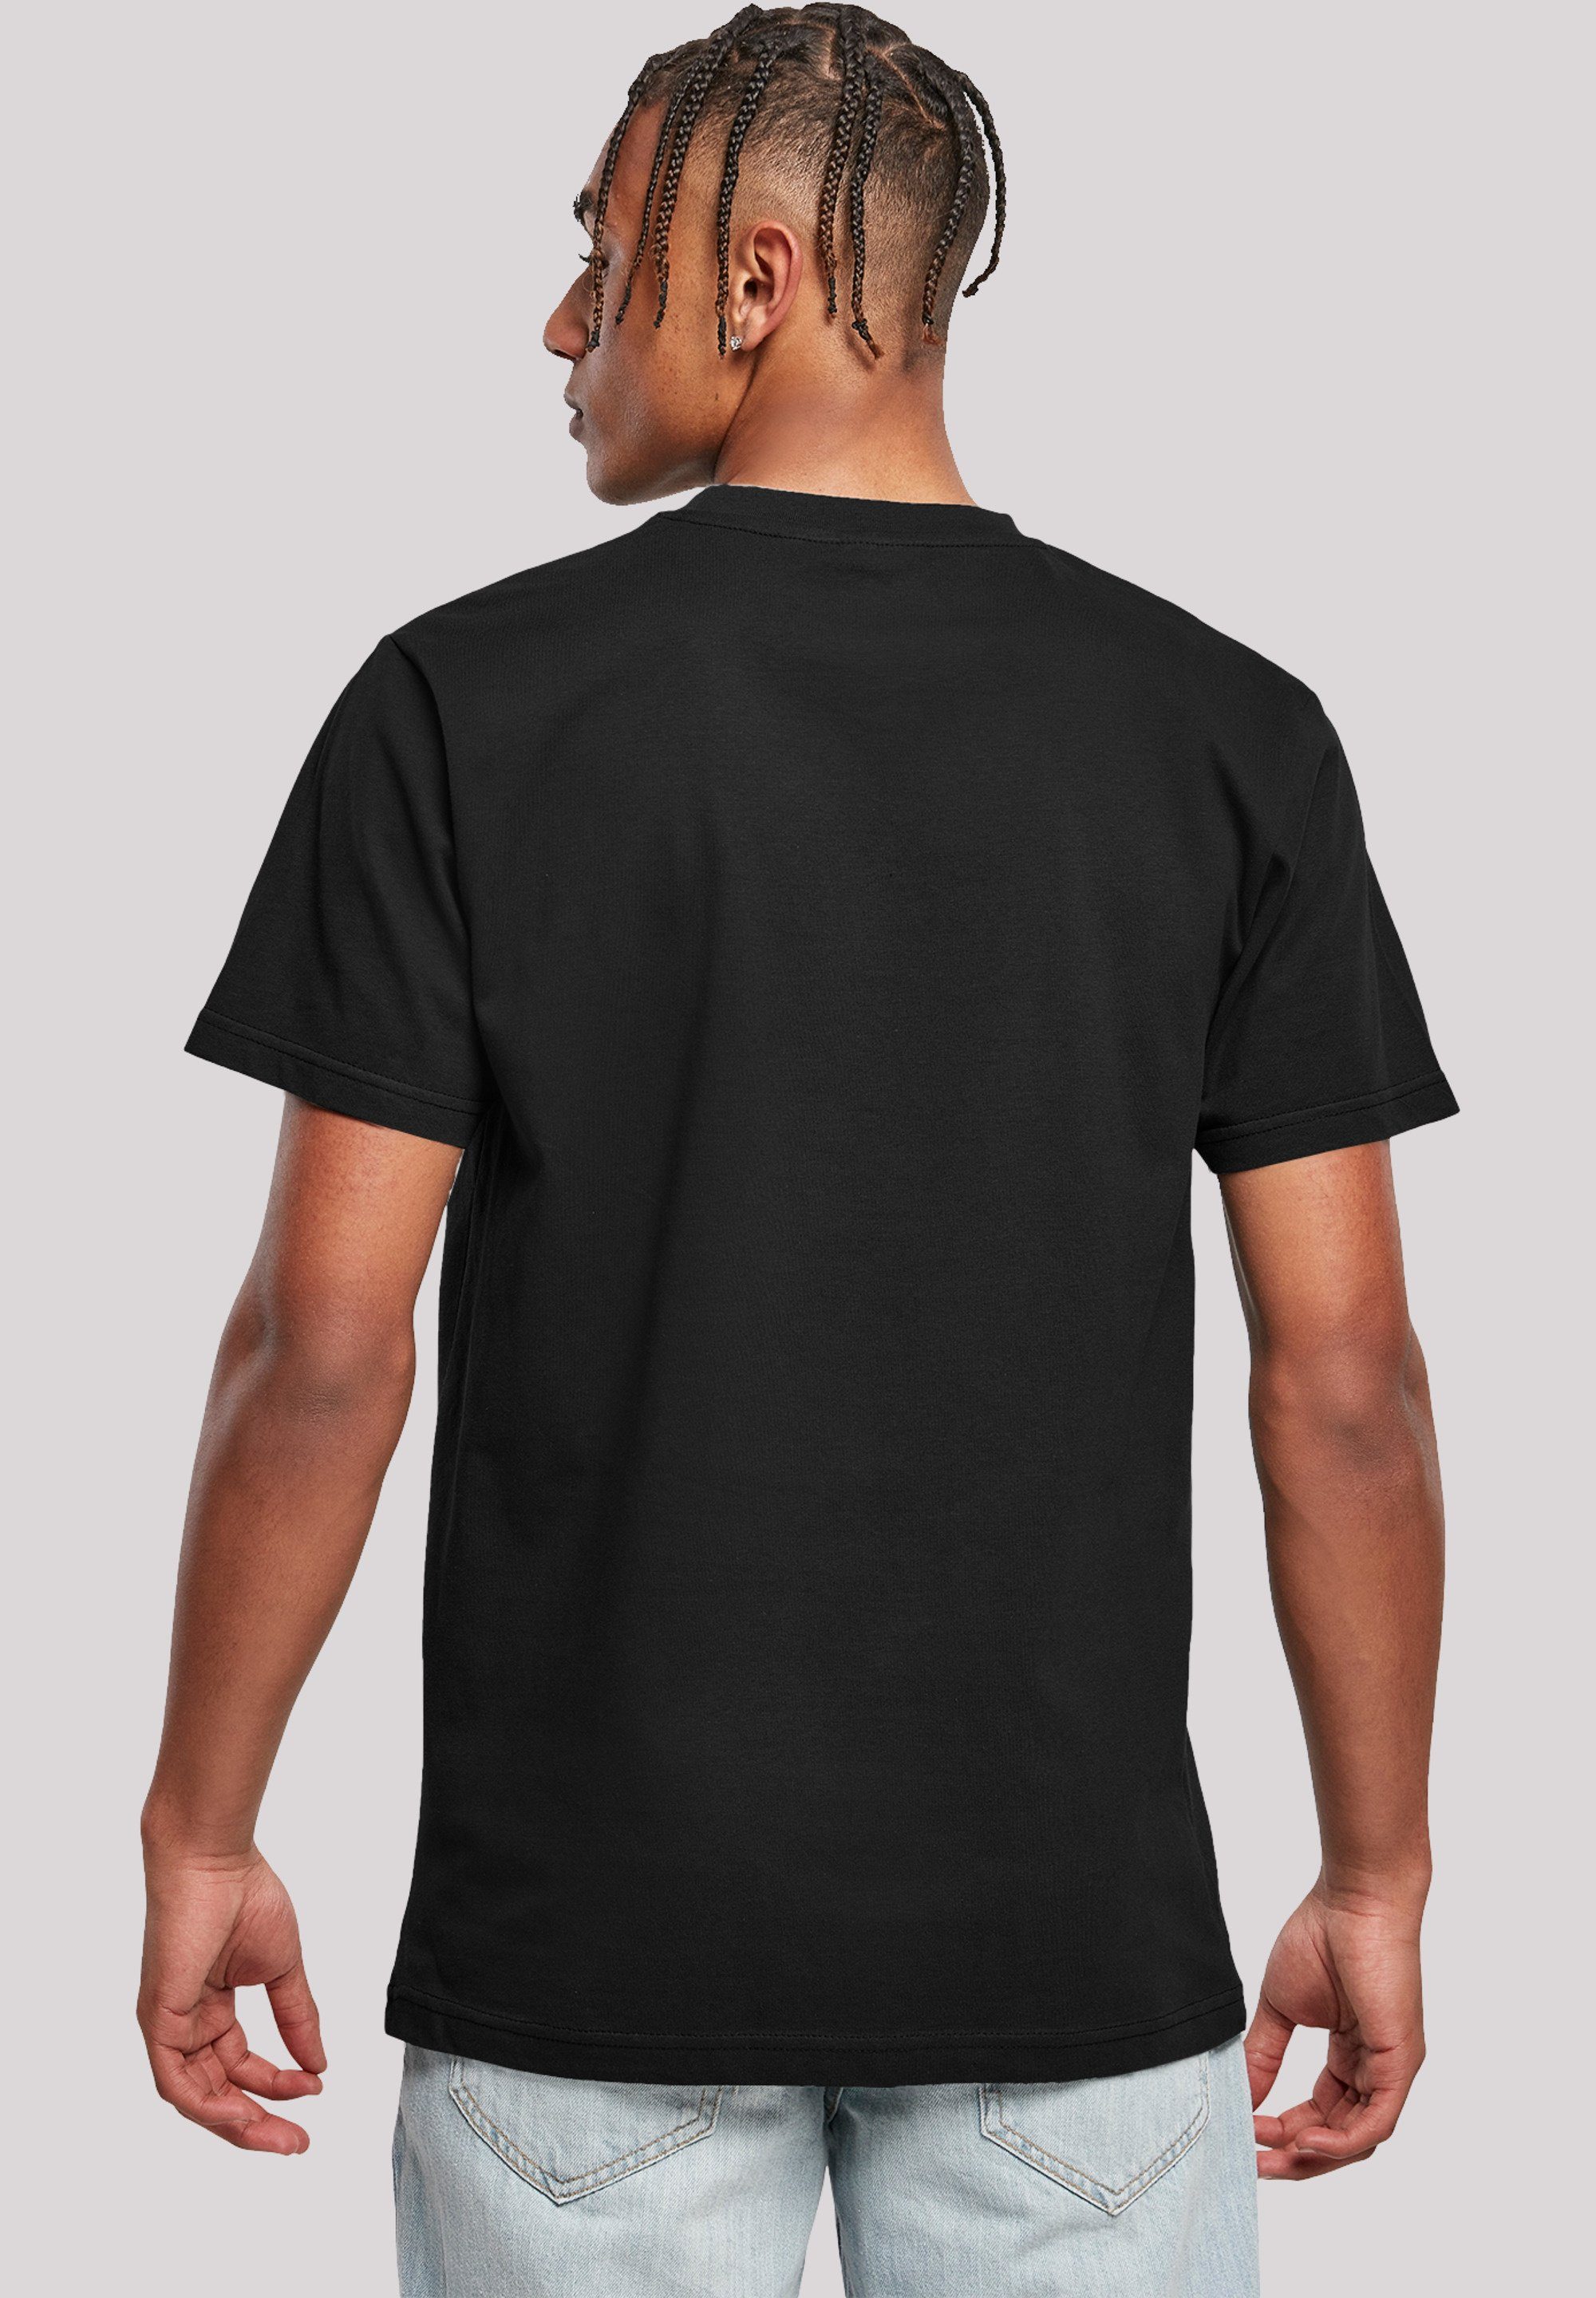 F4NT4STIC T-Shirt Big Theory Bazinga Herren,Premium Bang schwarz Merch,Regular-Fit,Basic,Bedruckt